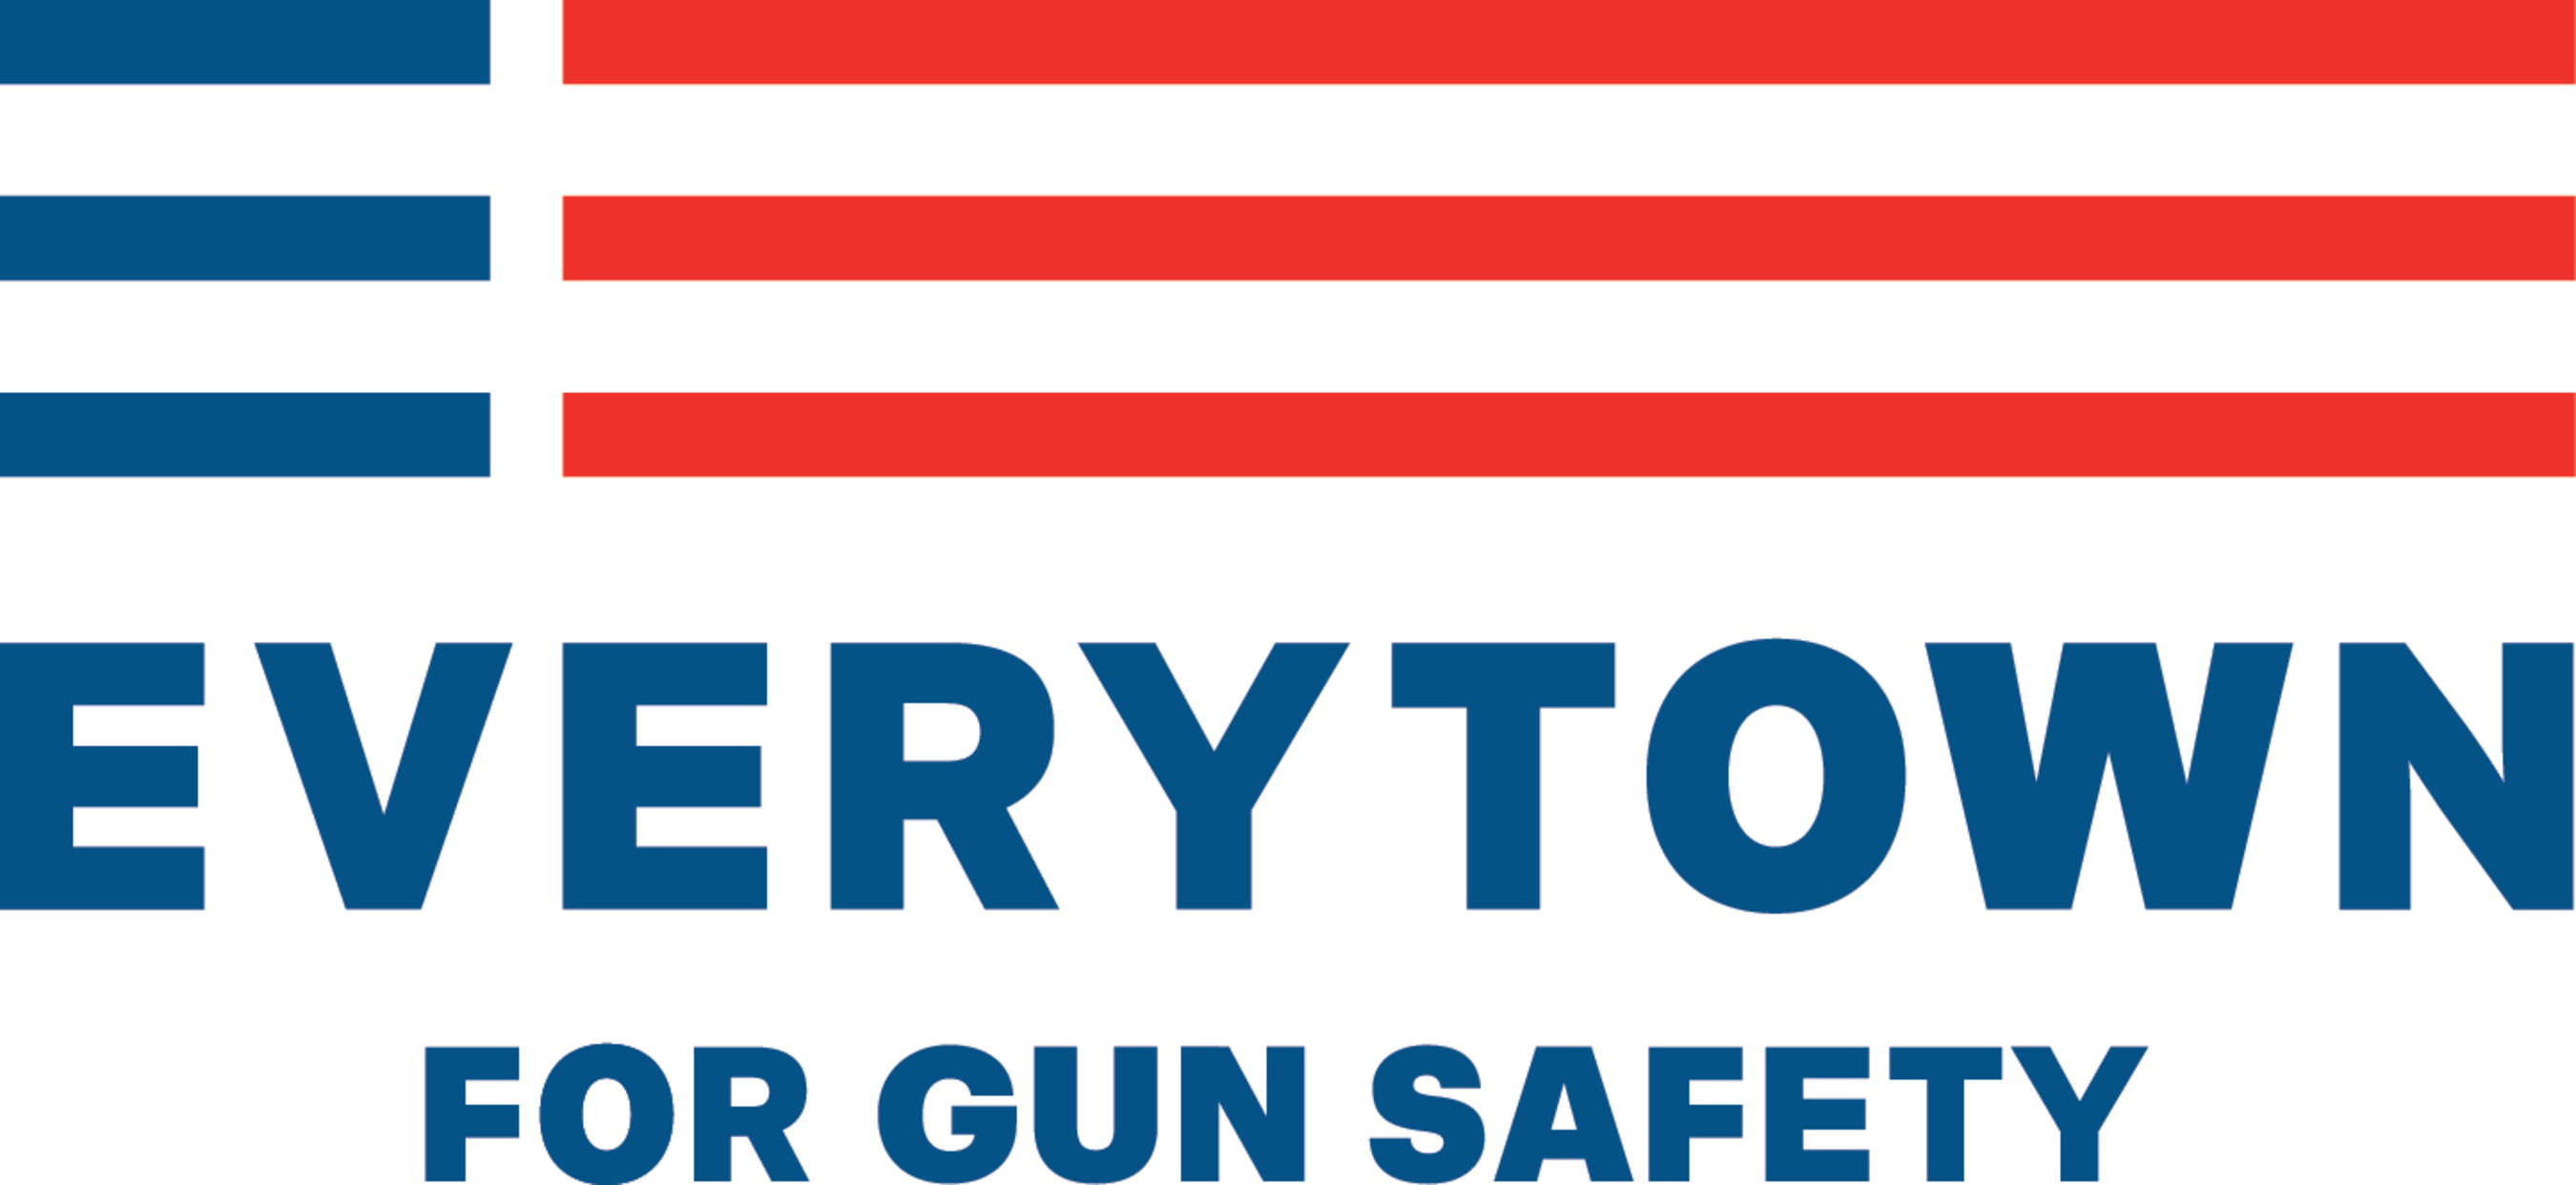 Everytown for Gun Safety Logo